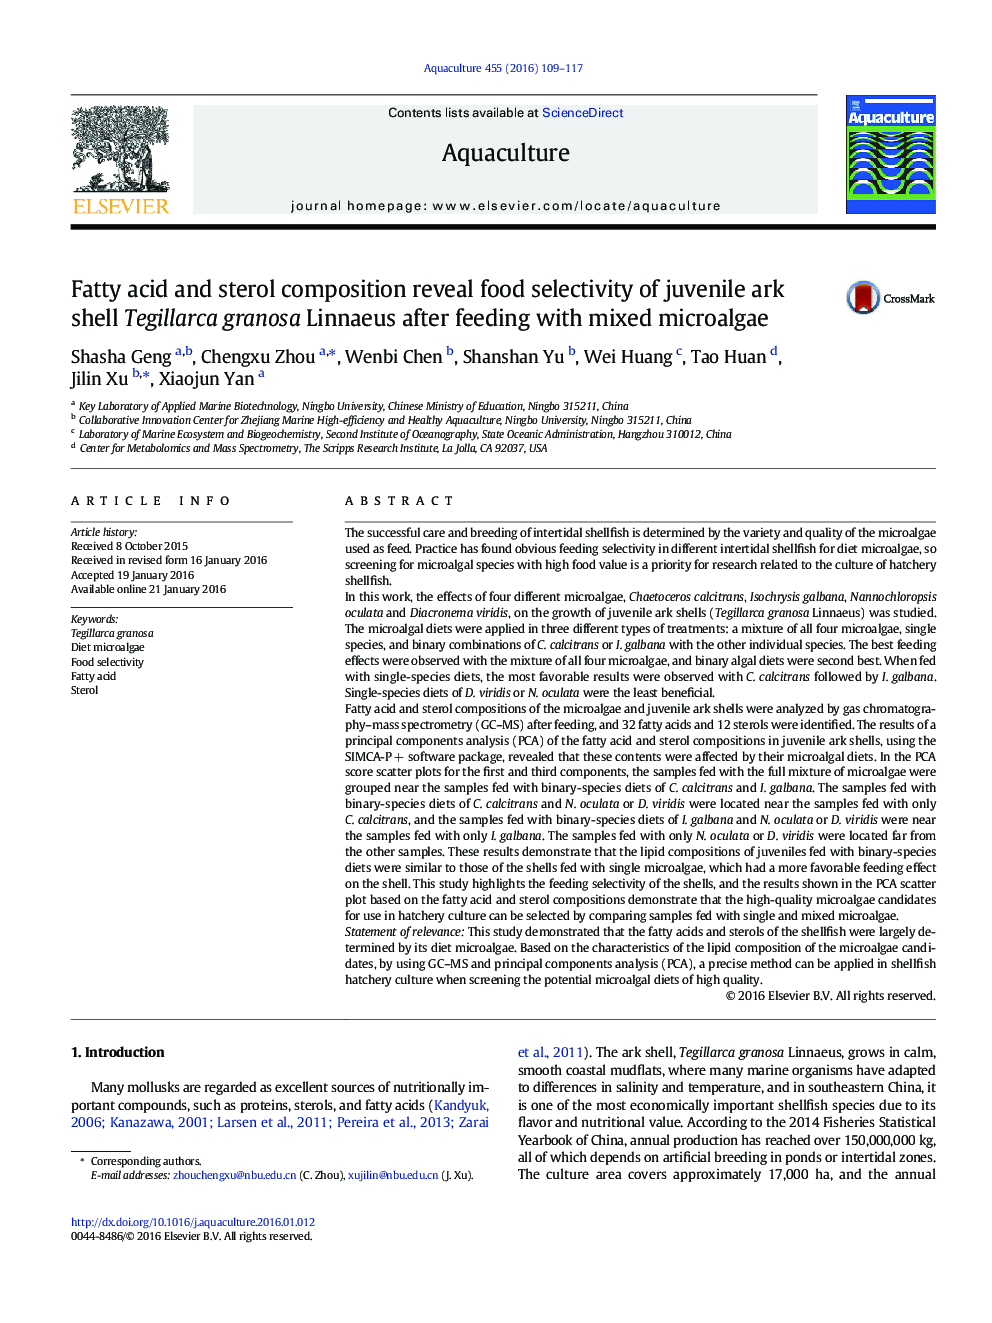 Fatty acid and sterol composition reveal food selectivity of juvenile ark shell Tegillarca granosa Linnaeus after feeding with mixed microalgae